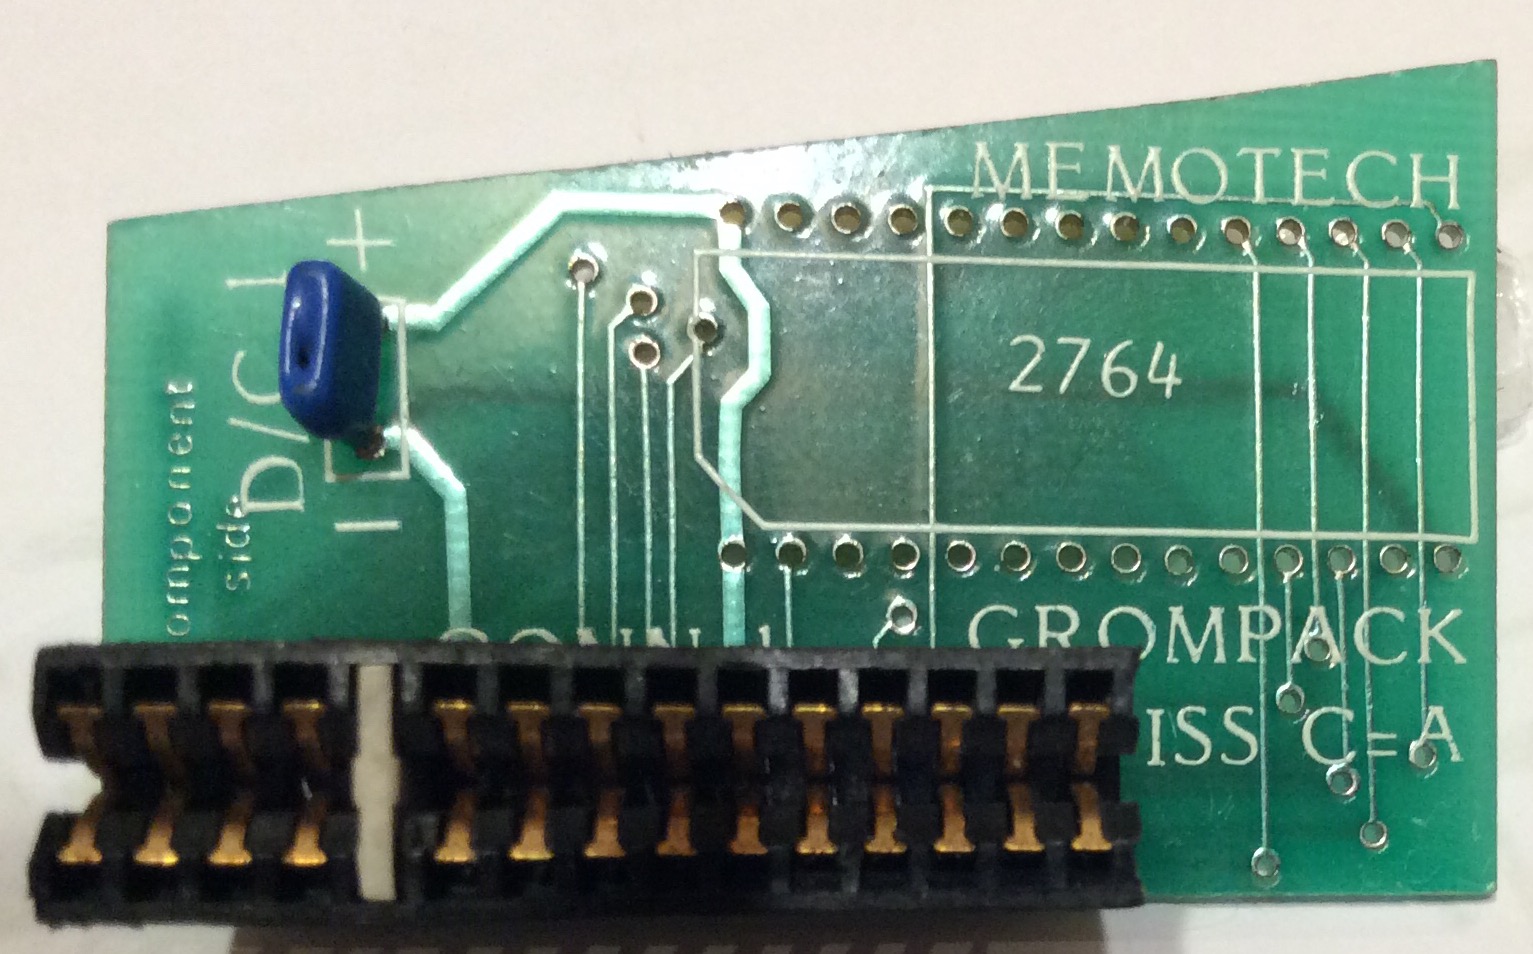 Memotech GROMPACK component side